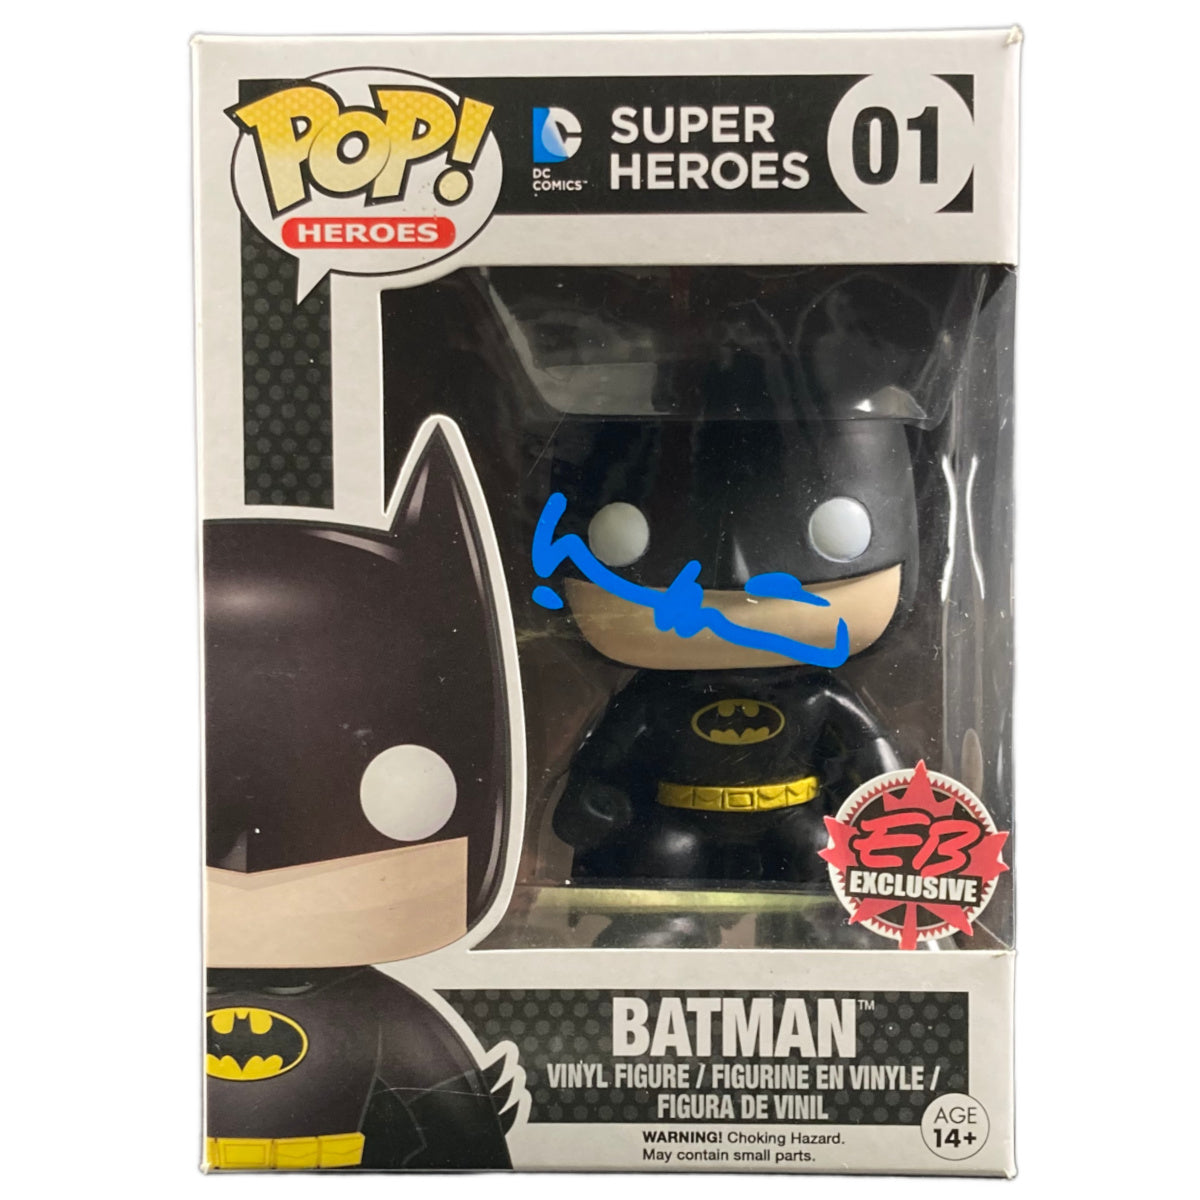 Val Kilmer Signed Funko POP Super Heroe Batman 01 Autographed JSA COA